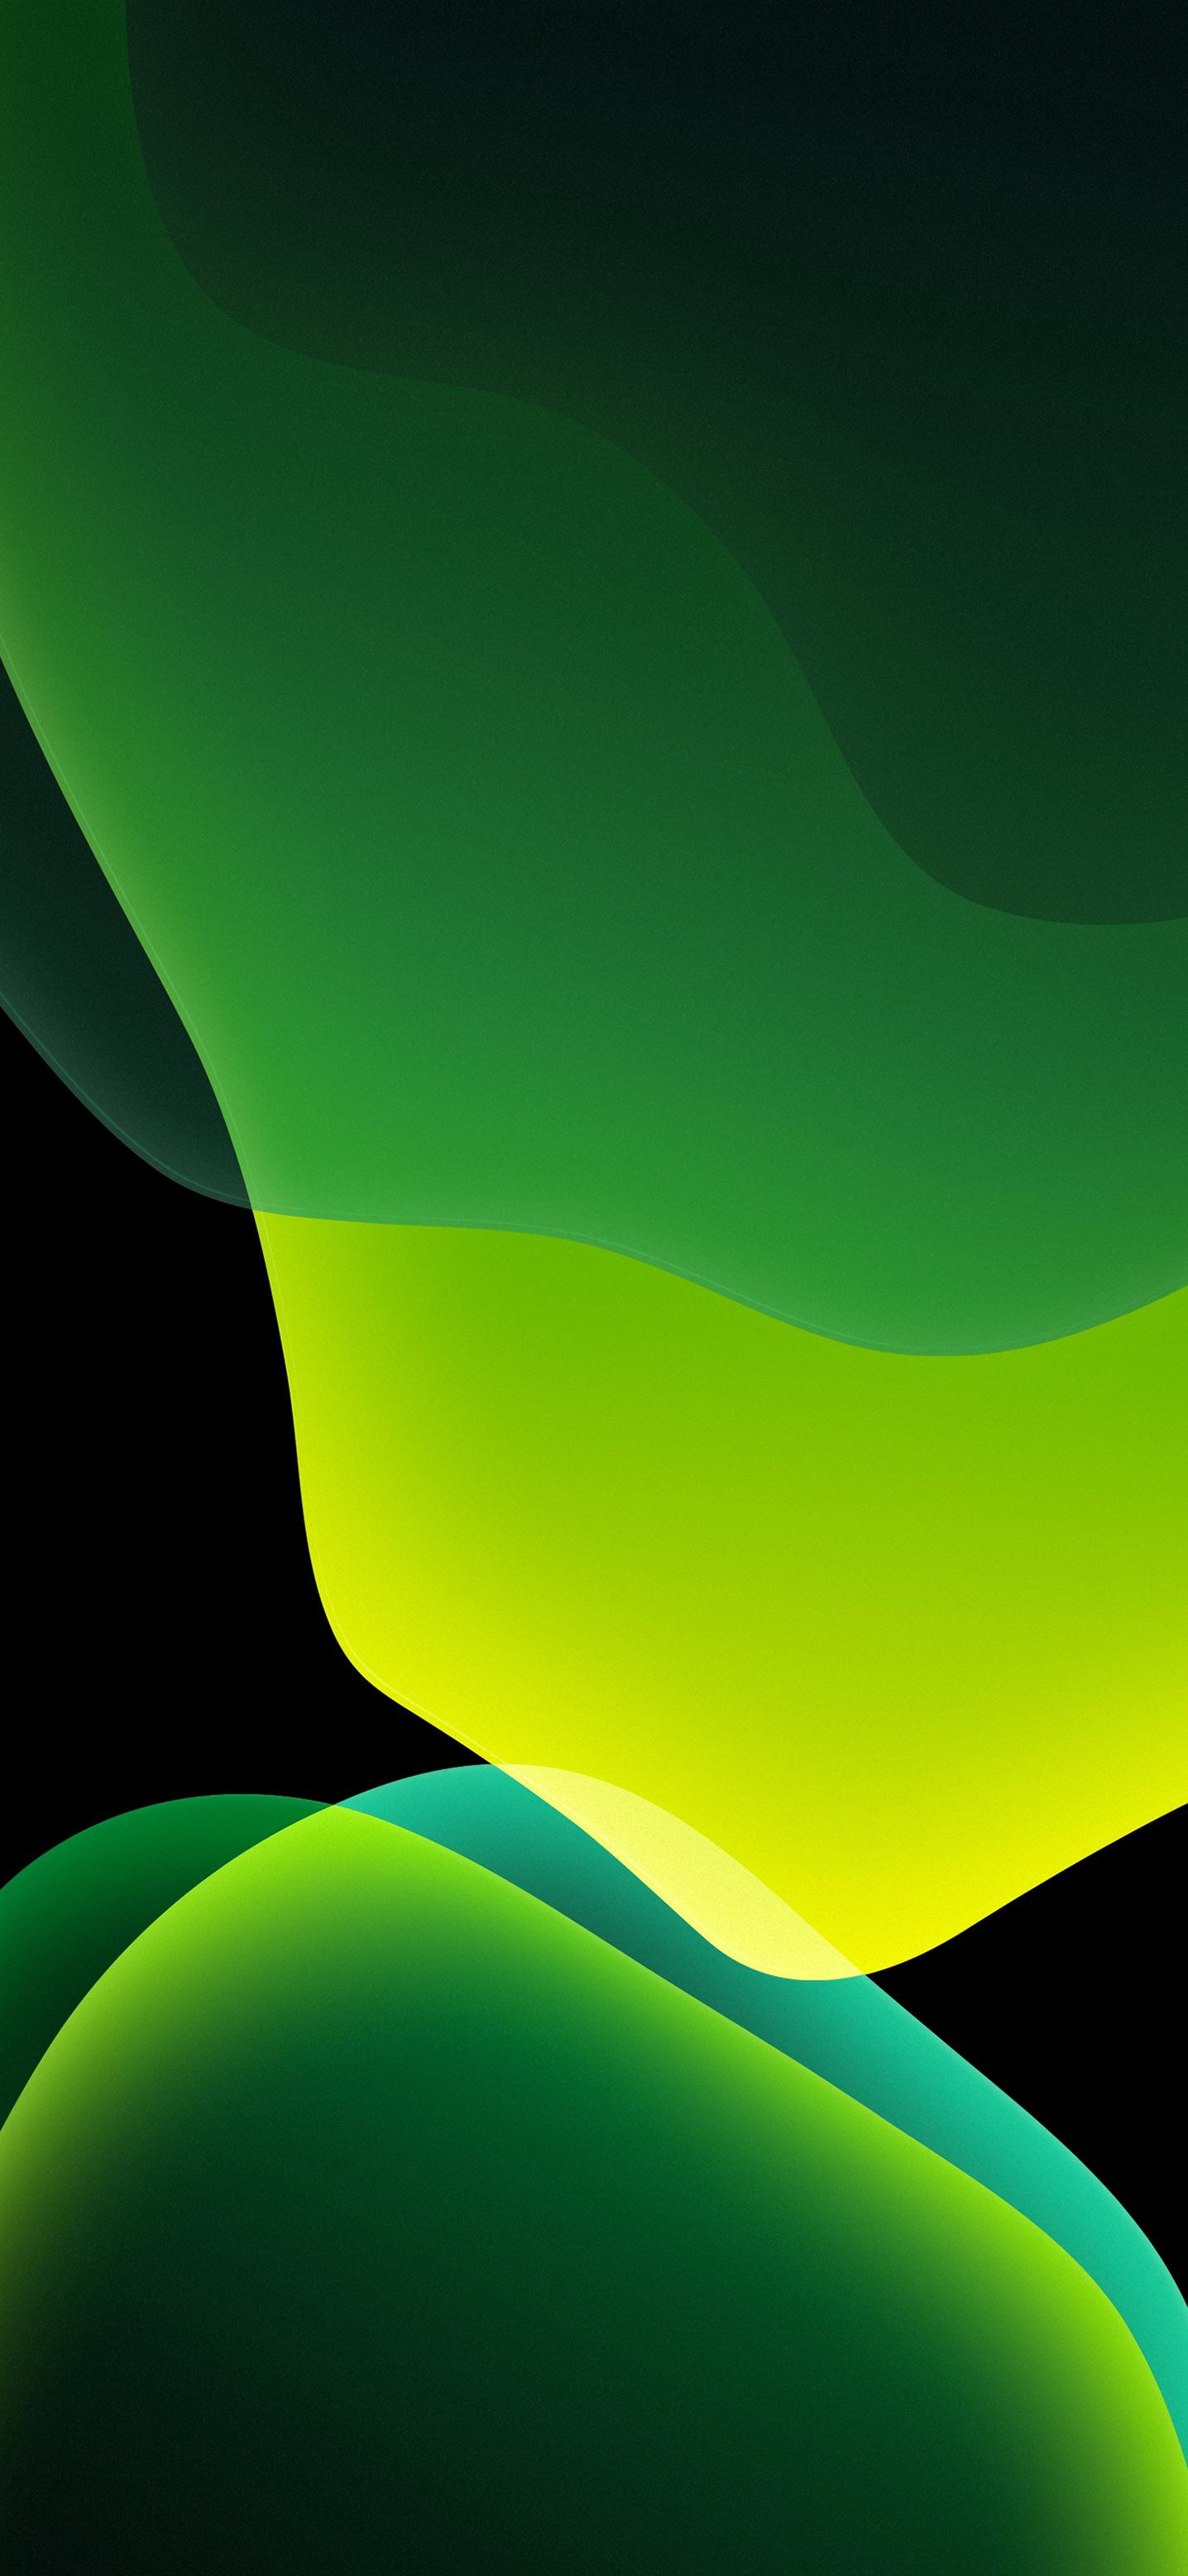 Green iOS 13 Dark mode wallpaper